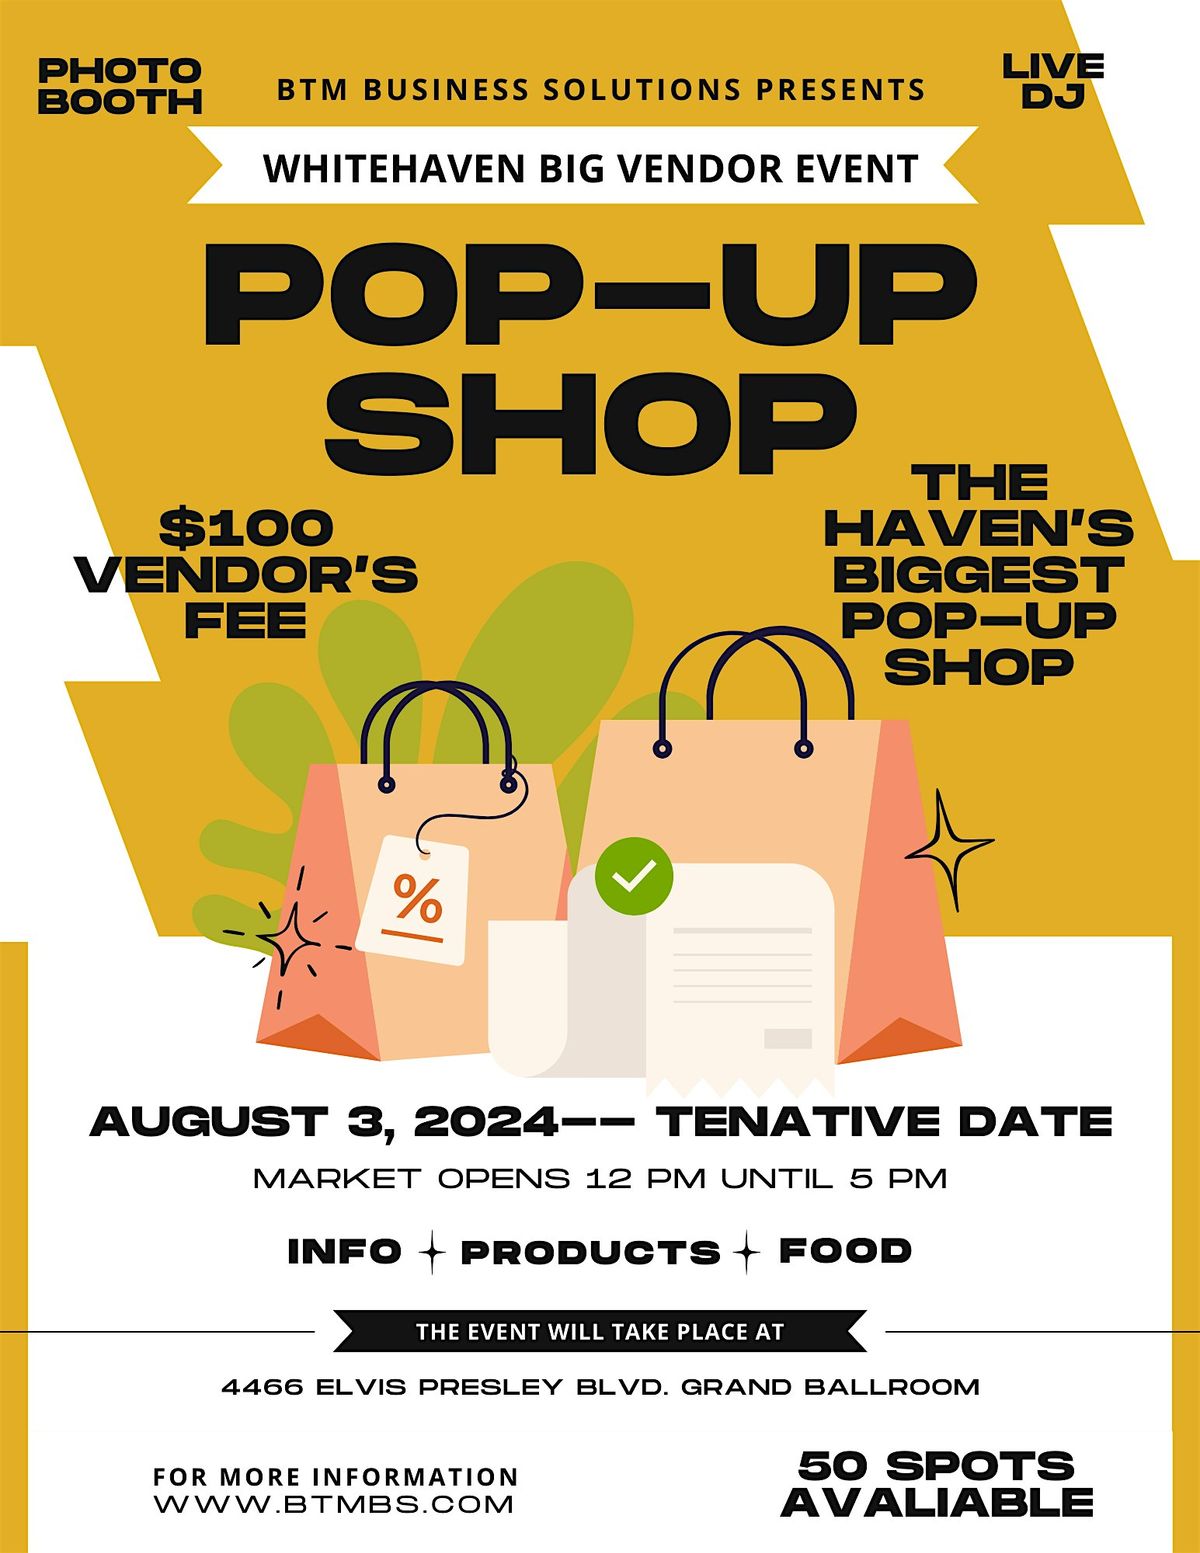 Whitehaven Big Vendor Event\/Pop-Up Shop